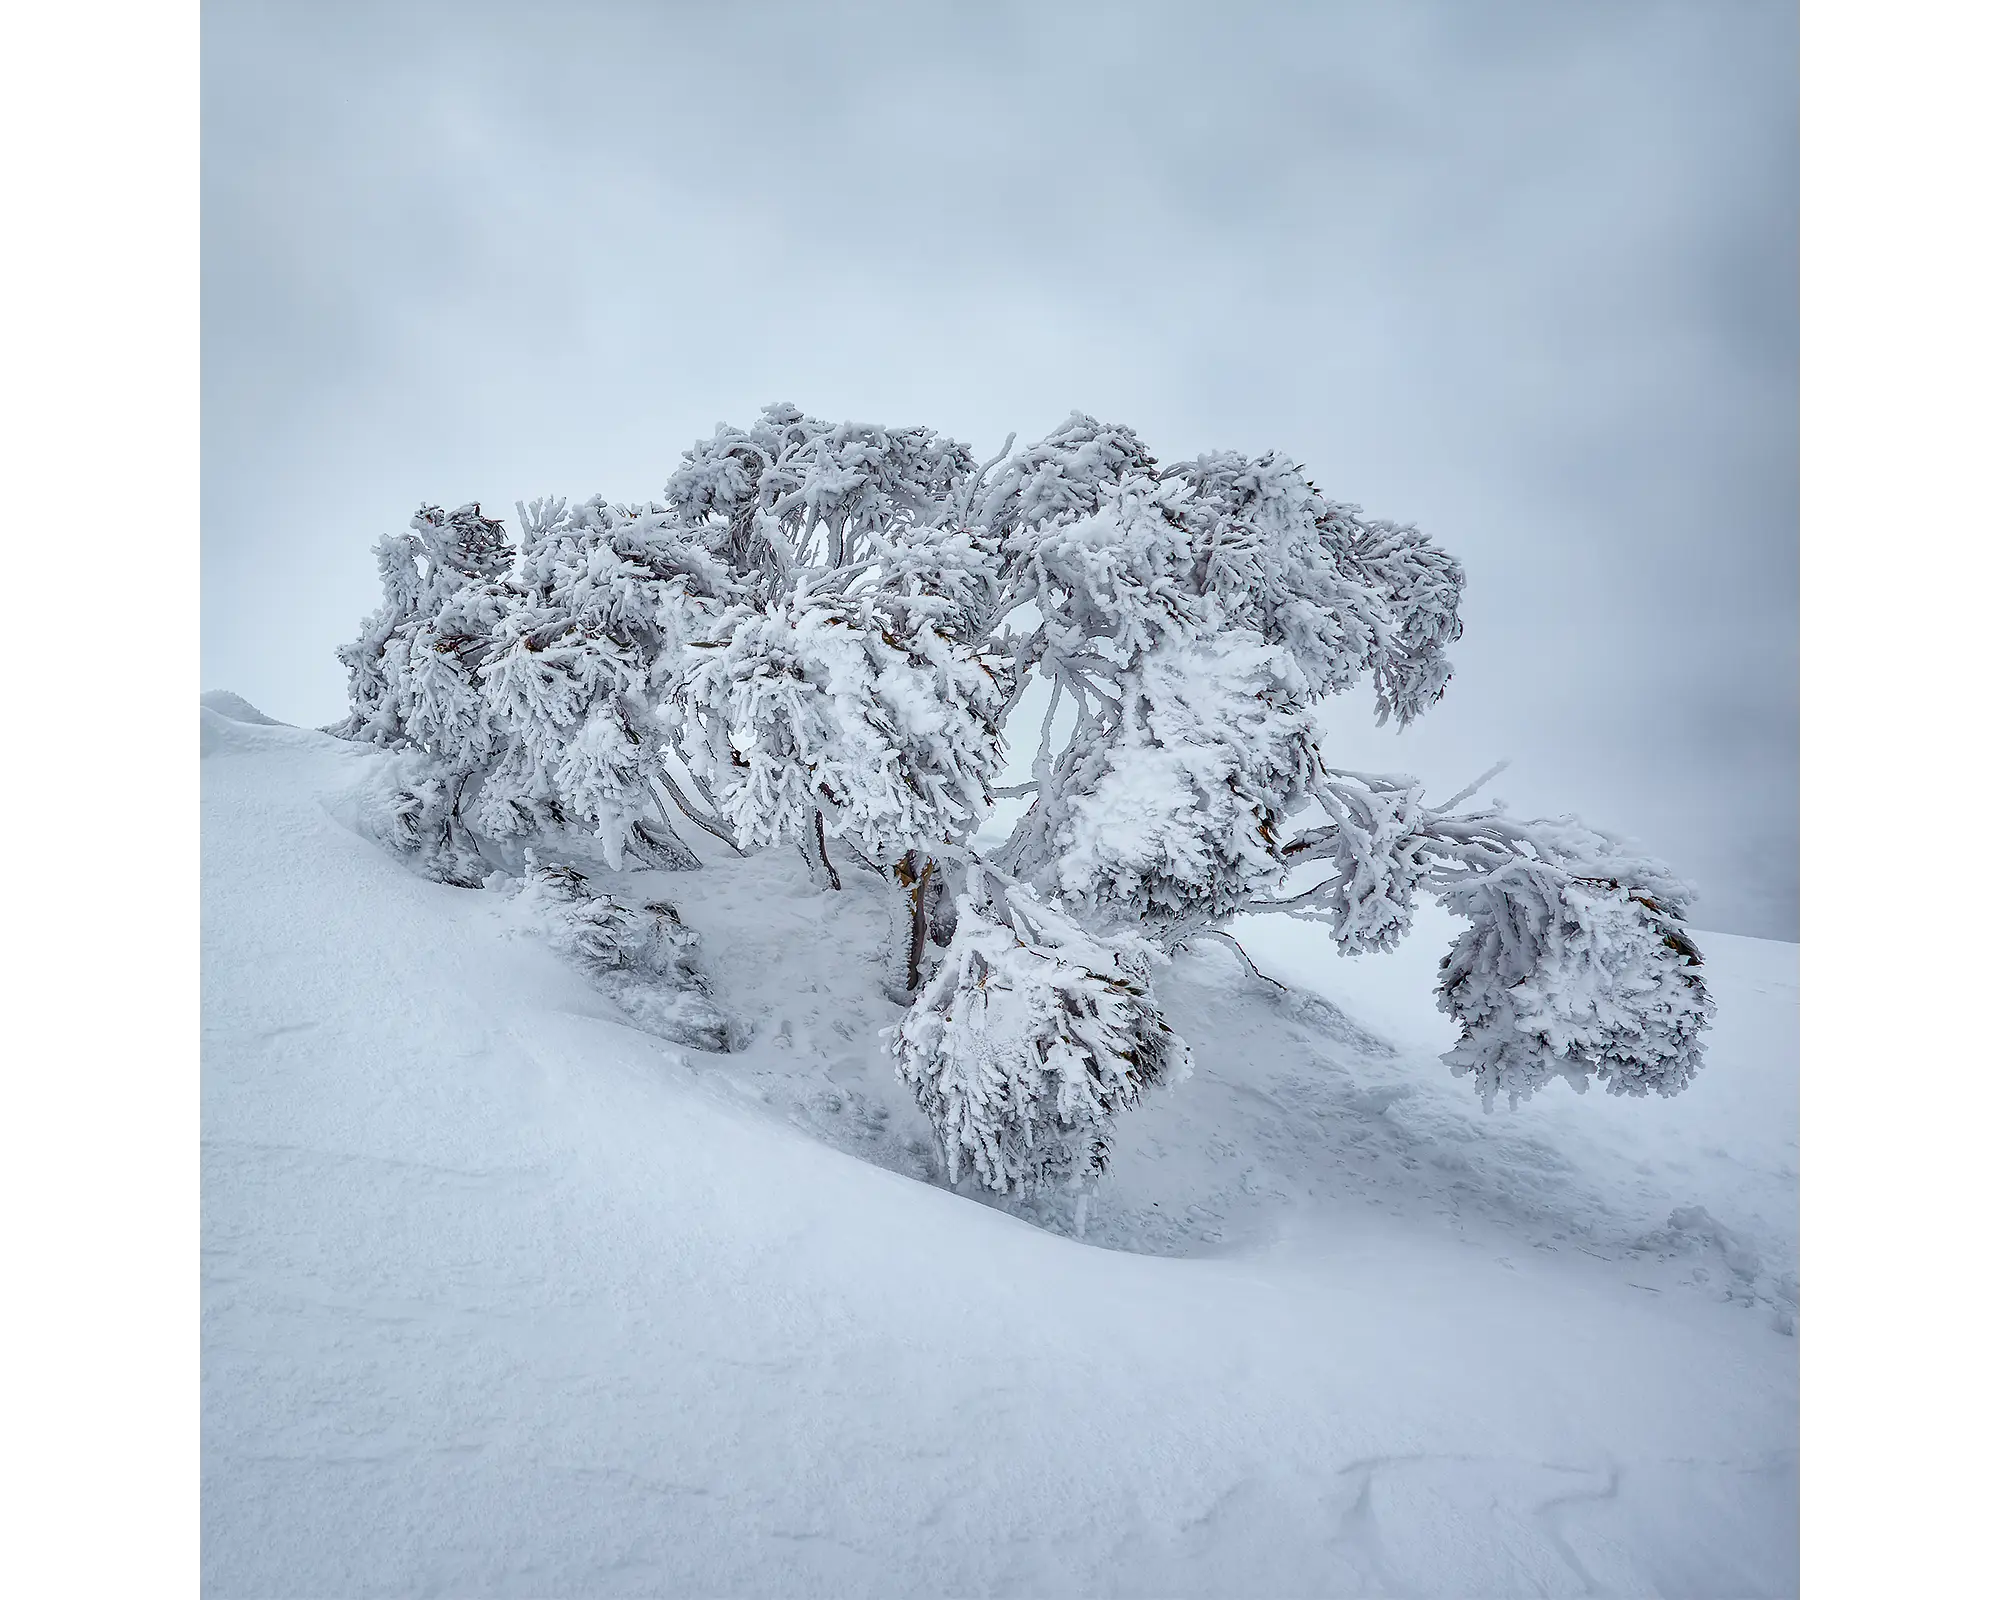 Frozen. Snow Gum covered in snow and ice, Mount Hotham, Victoria, Australia.